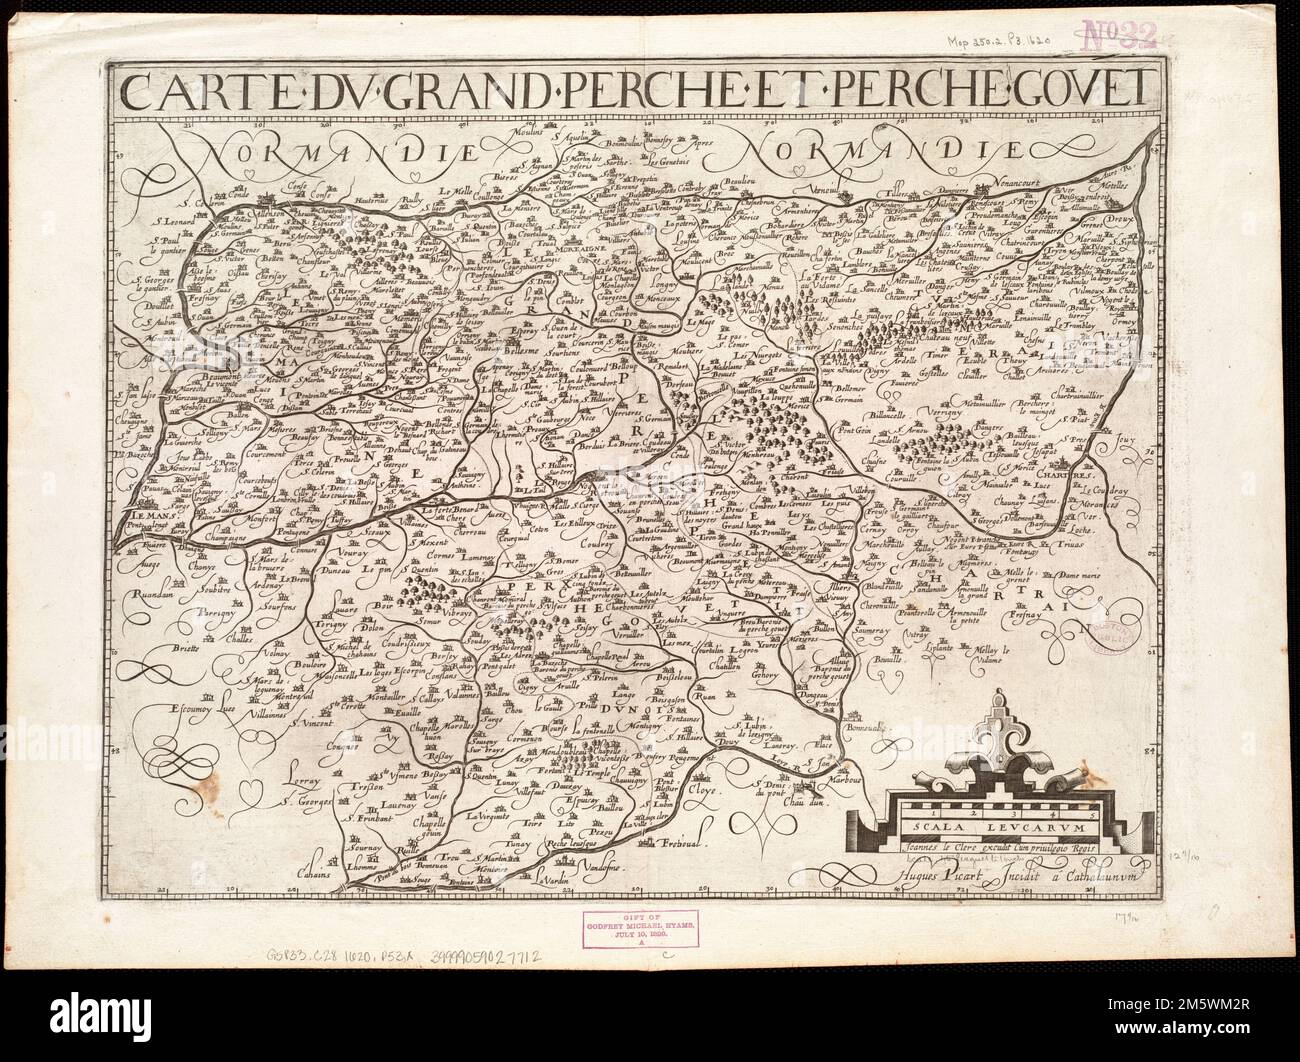 Mapa de Grand Perche et Perche Gouet... Mapa dv Grand Perche et Perche  Govet. Carte dv